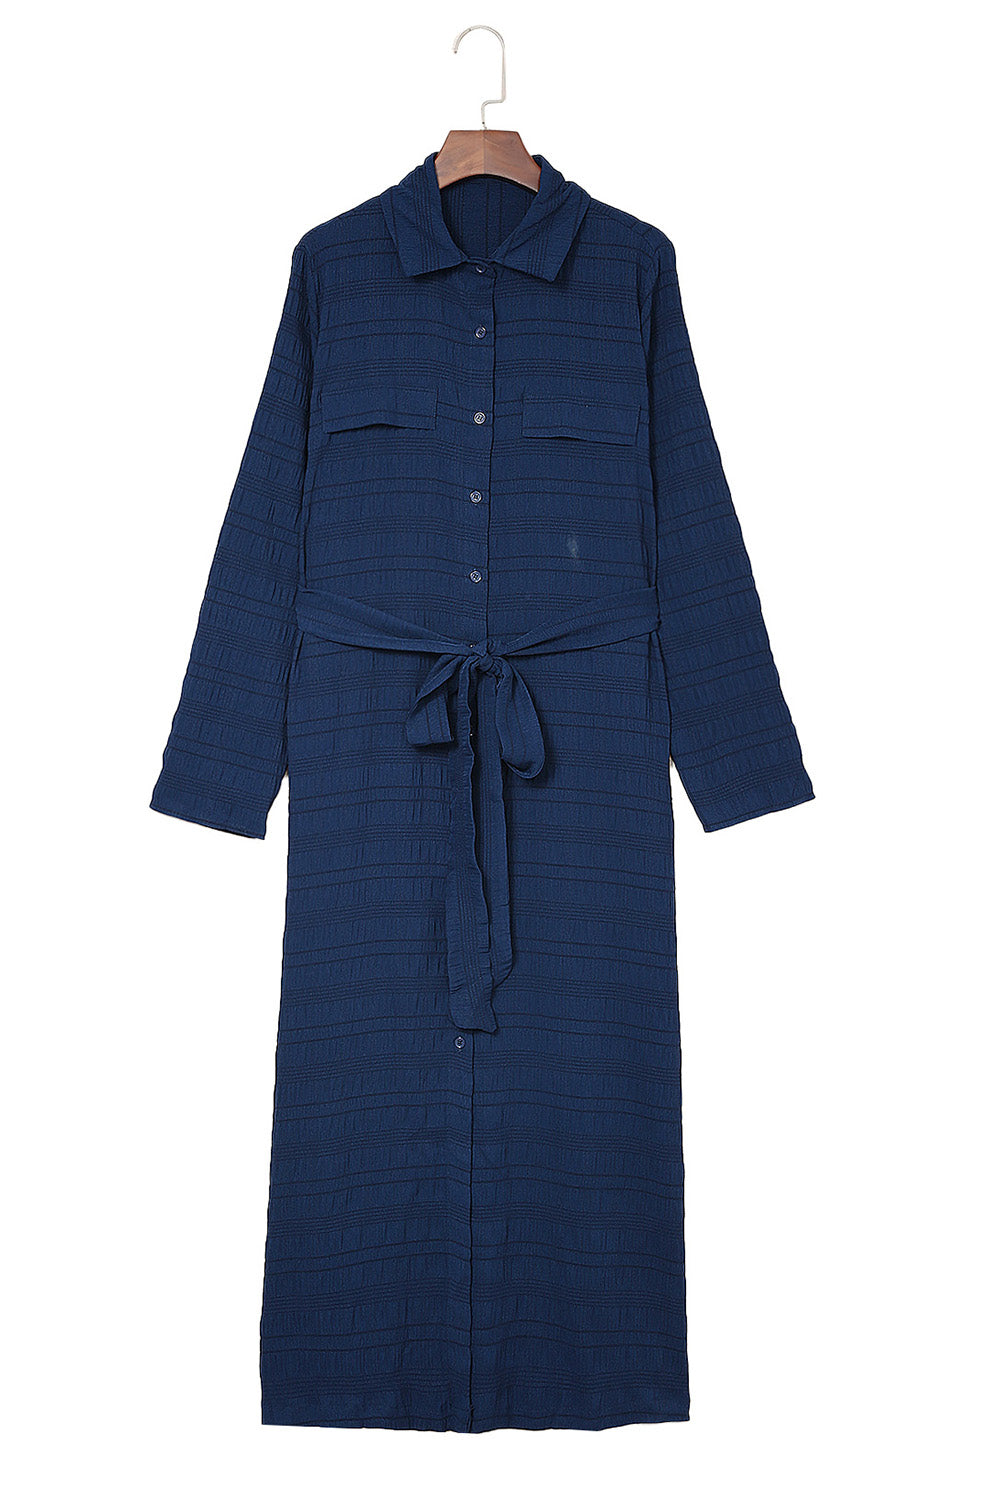 Blue Crinkle Textured Long Sleeve Shirt Dress with Belt